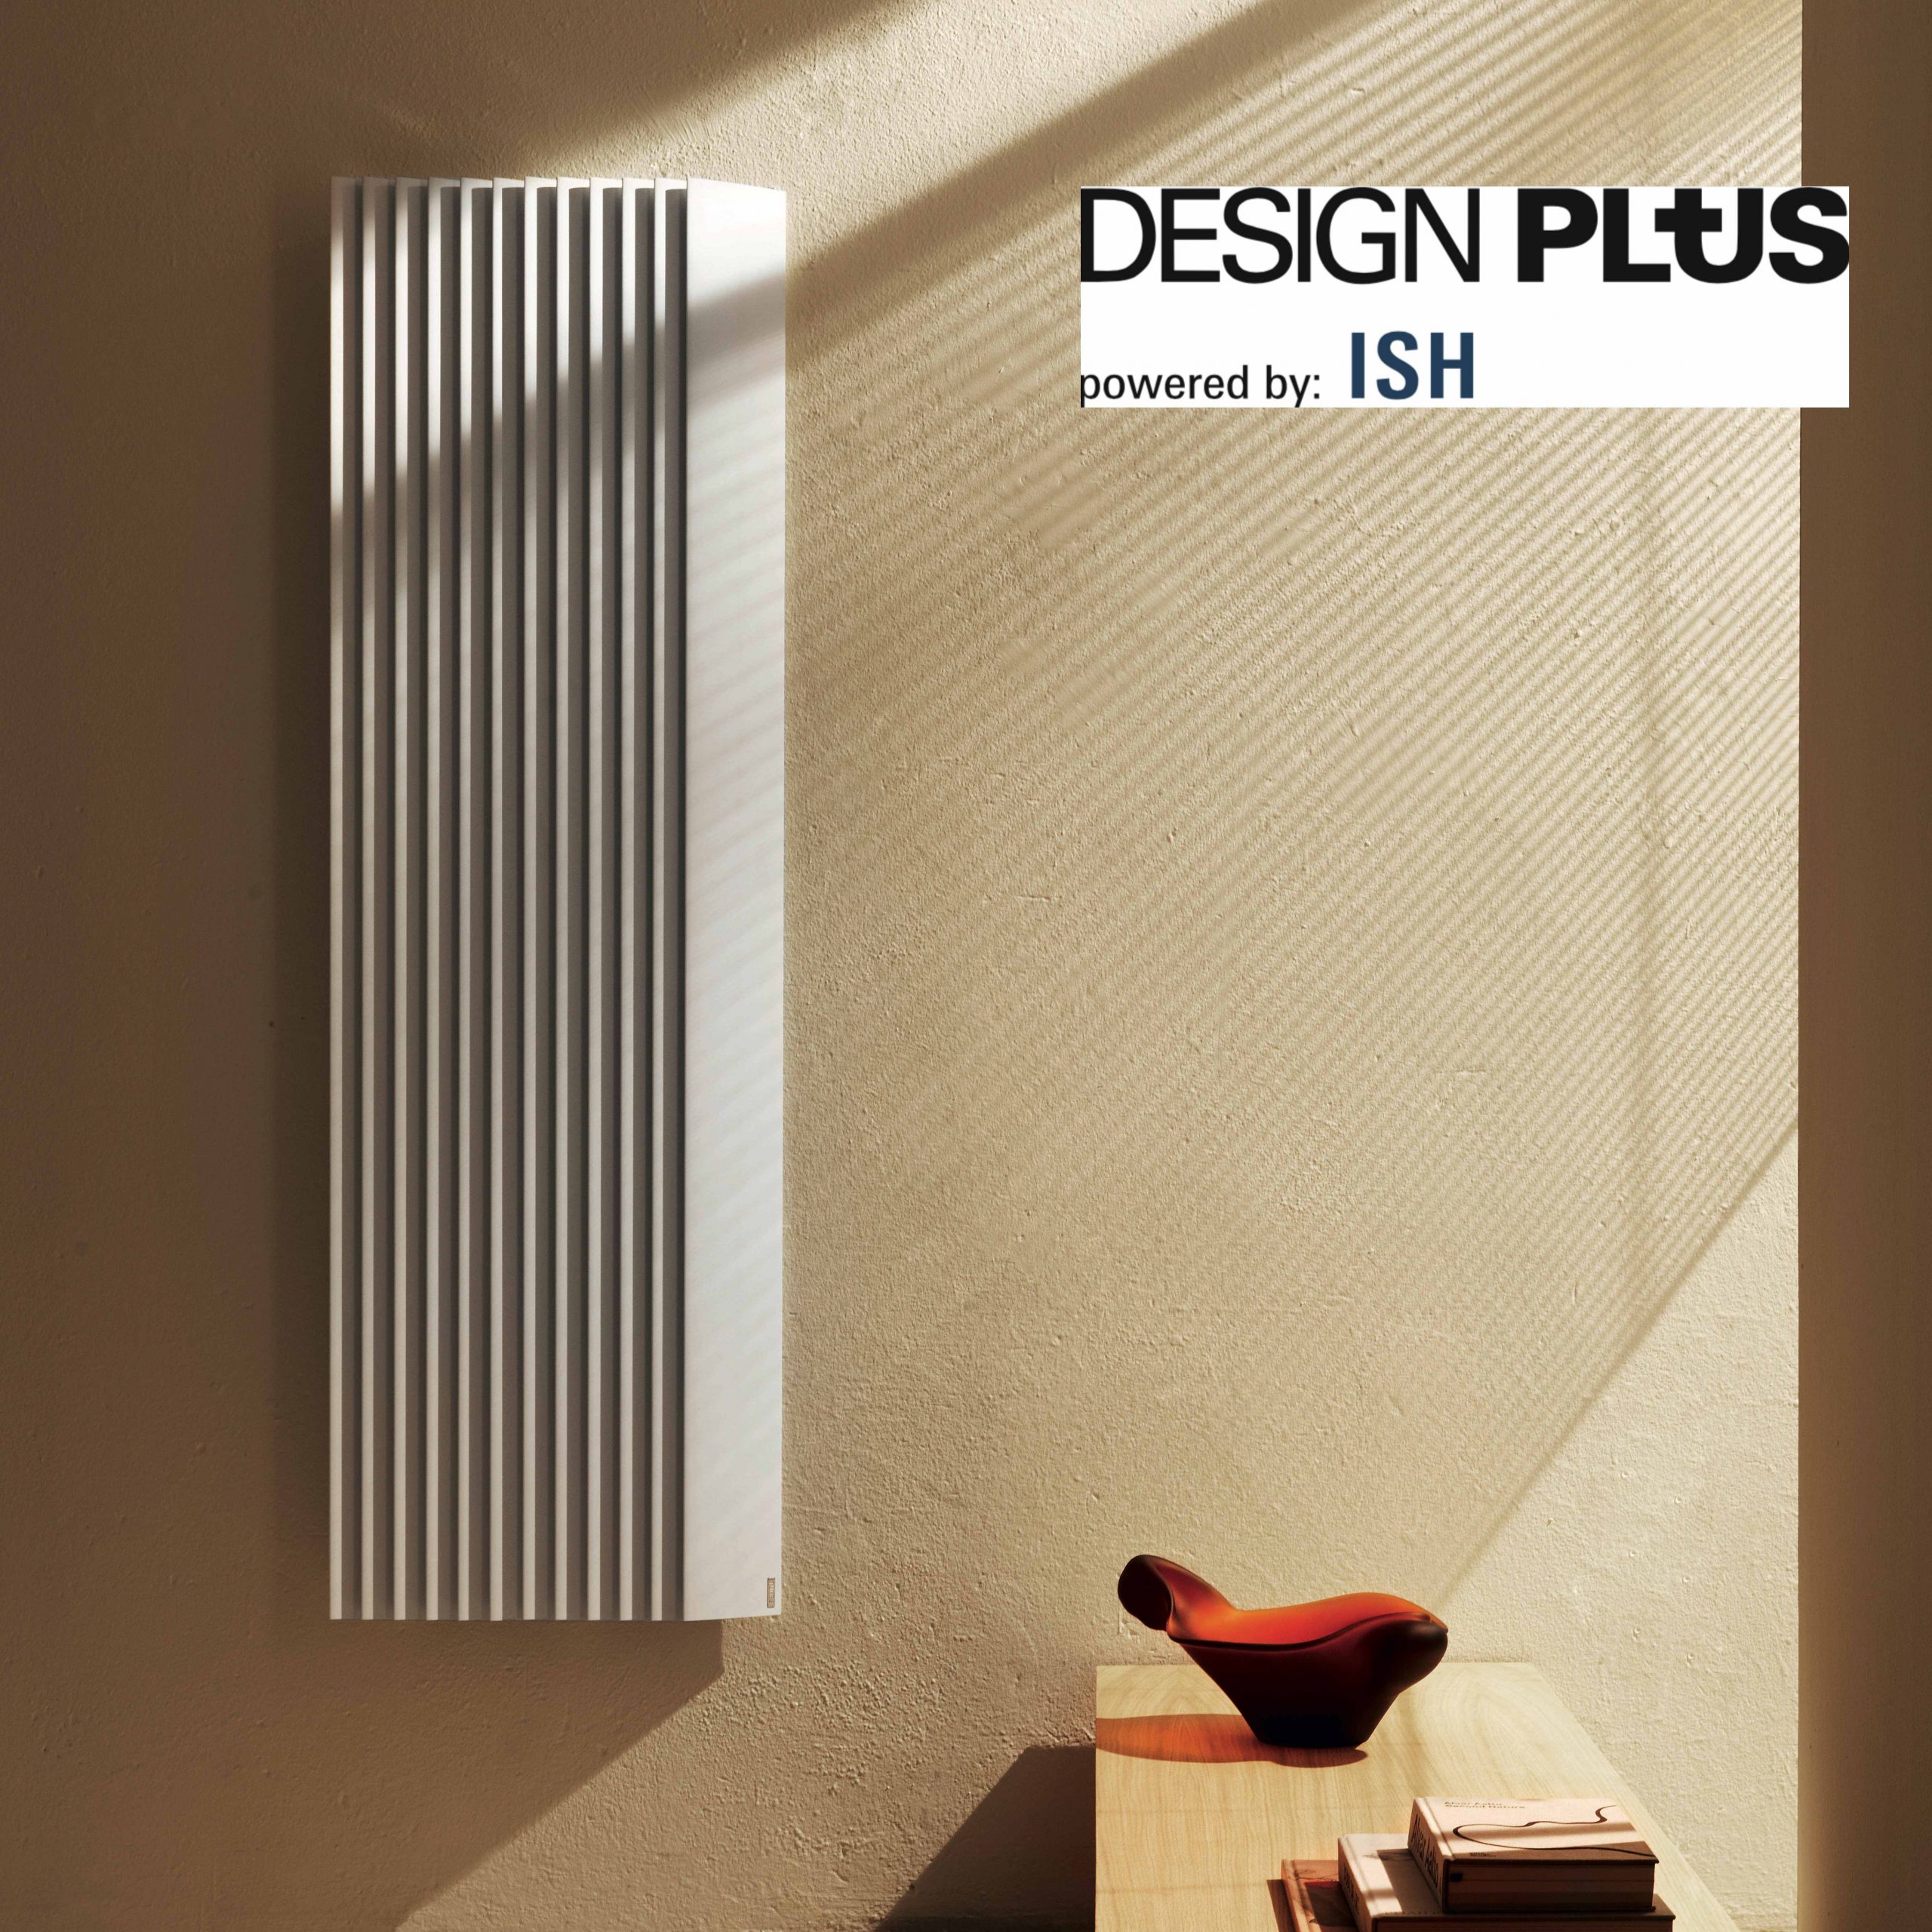 Step-by-Step gana el Design Plus powered by ISH 2019